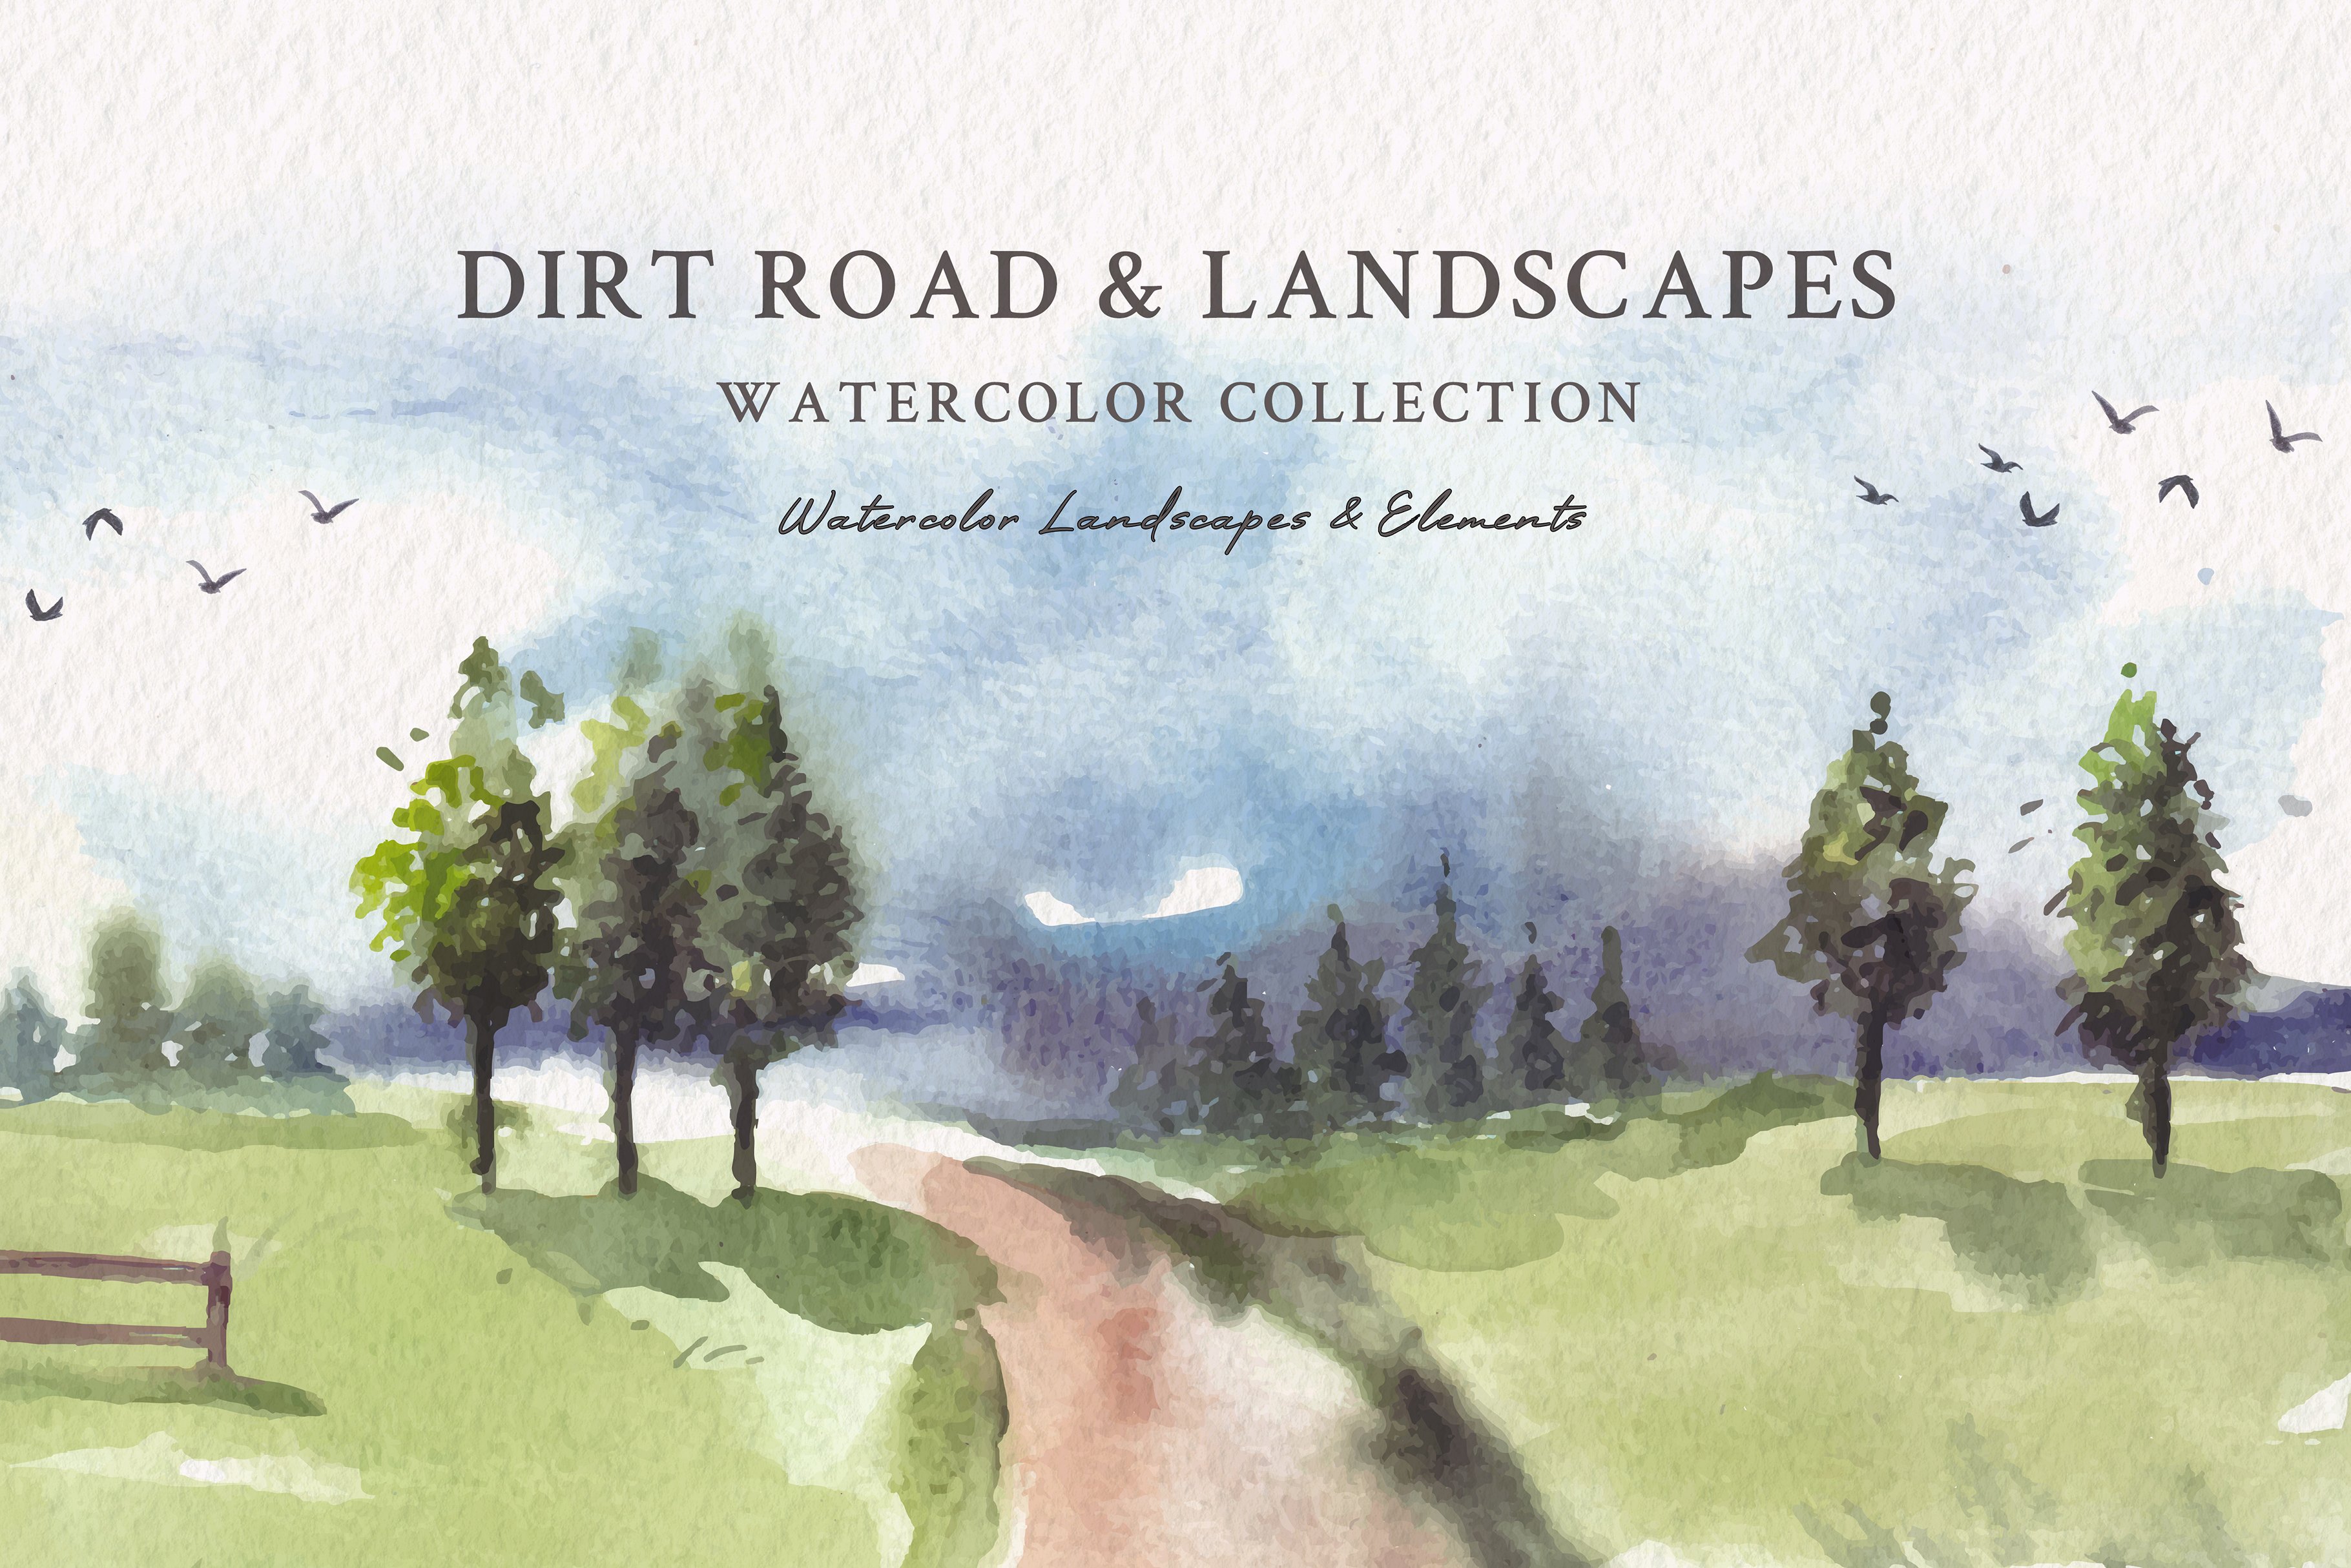 Watercolor Dirt Road & Landscapes cover image.